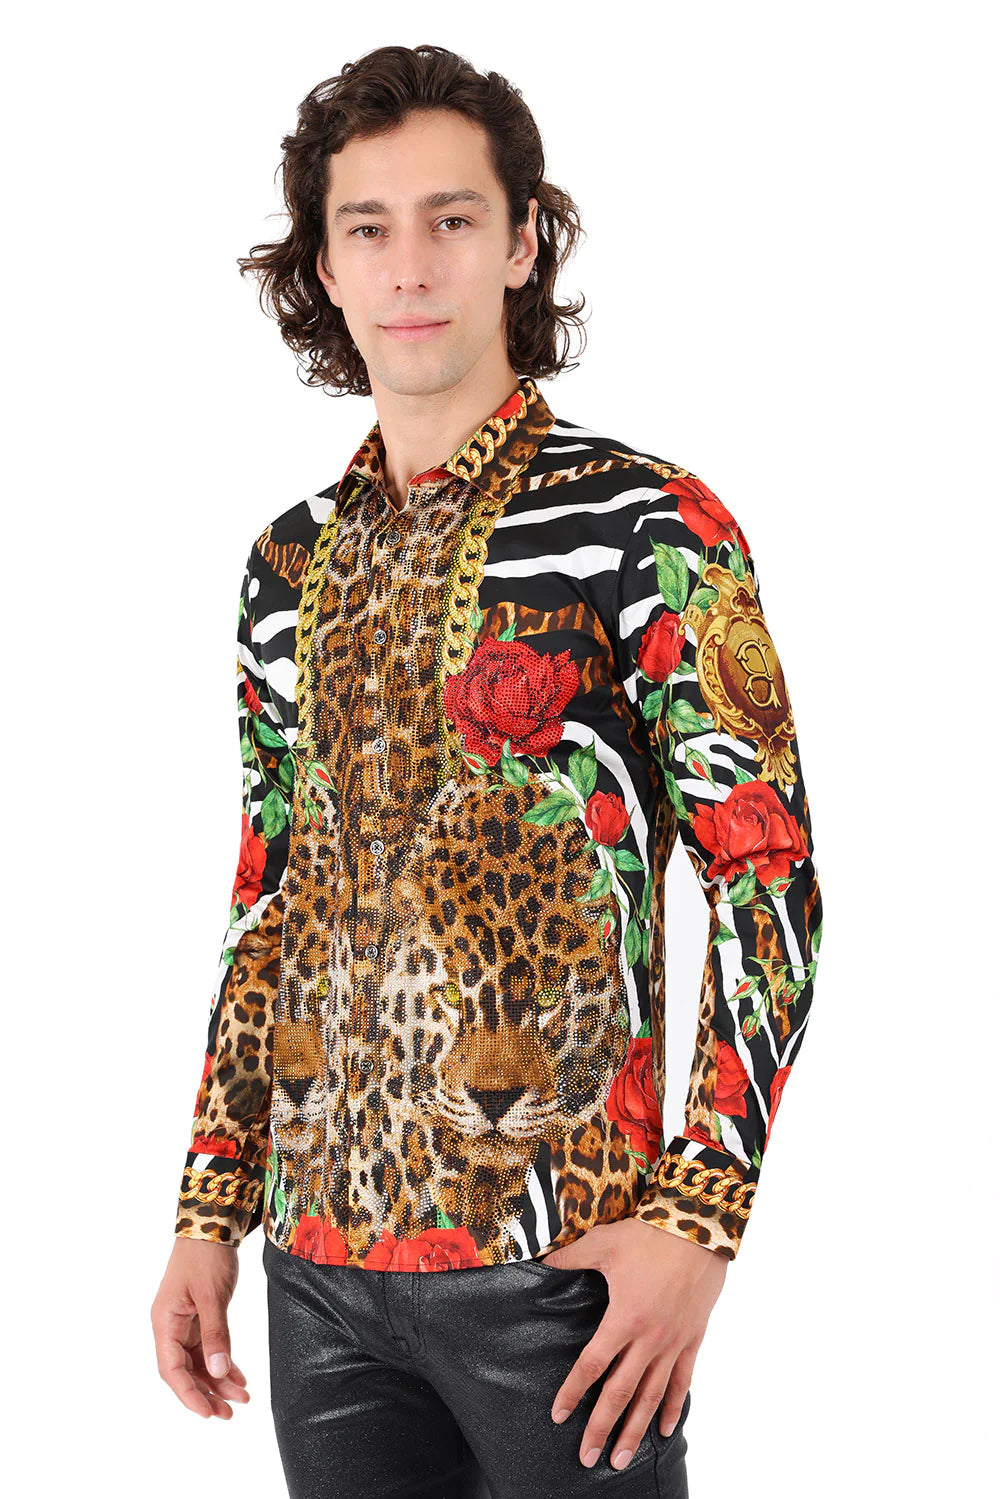 Cape Town Barabas Men's Rhinestone Baroque Leopard & Floral Shirt SHIRTS Barabas Collection Vercini